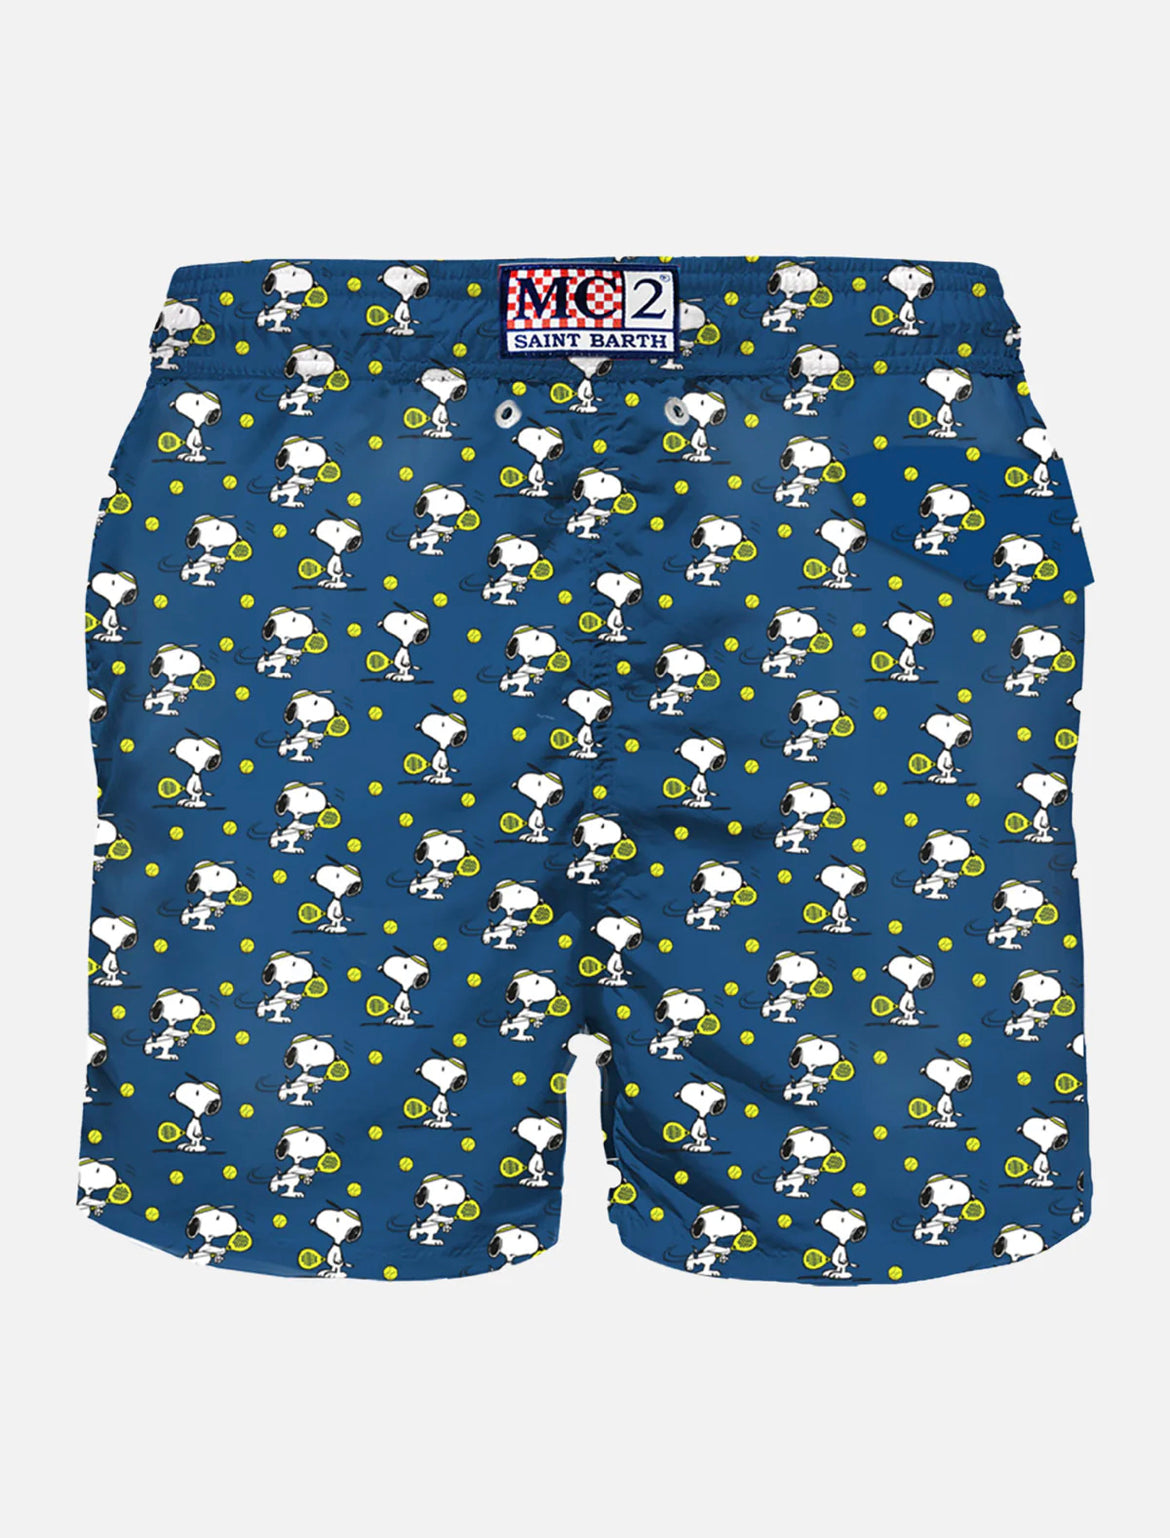 MC2SaintBarth Man light fabric swim shorts with Snoopy print | SNOOPY - PEANUTS™ SPECIAL EDITION